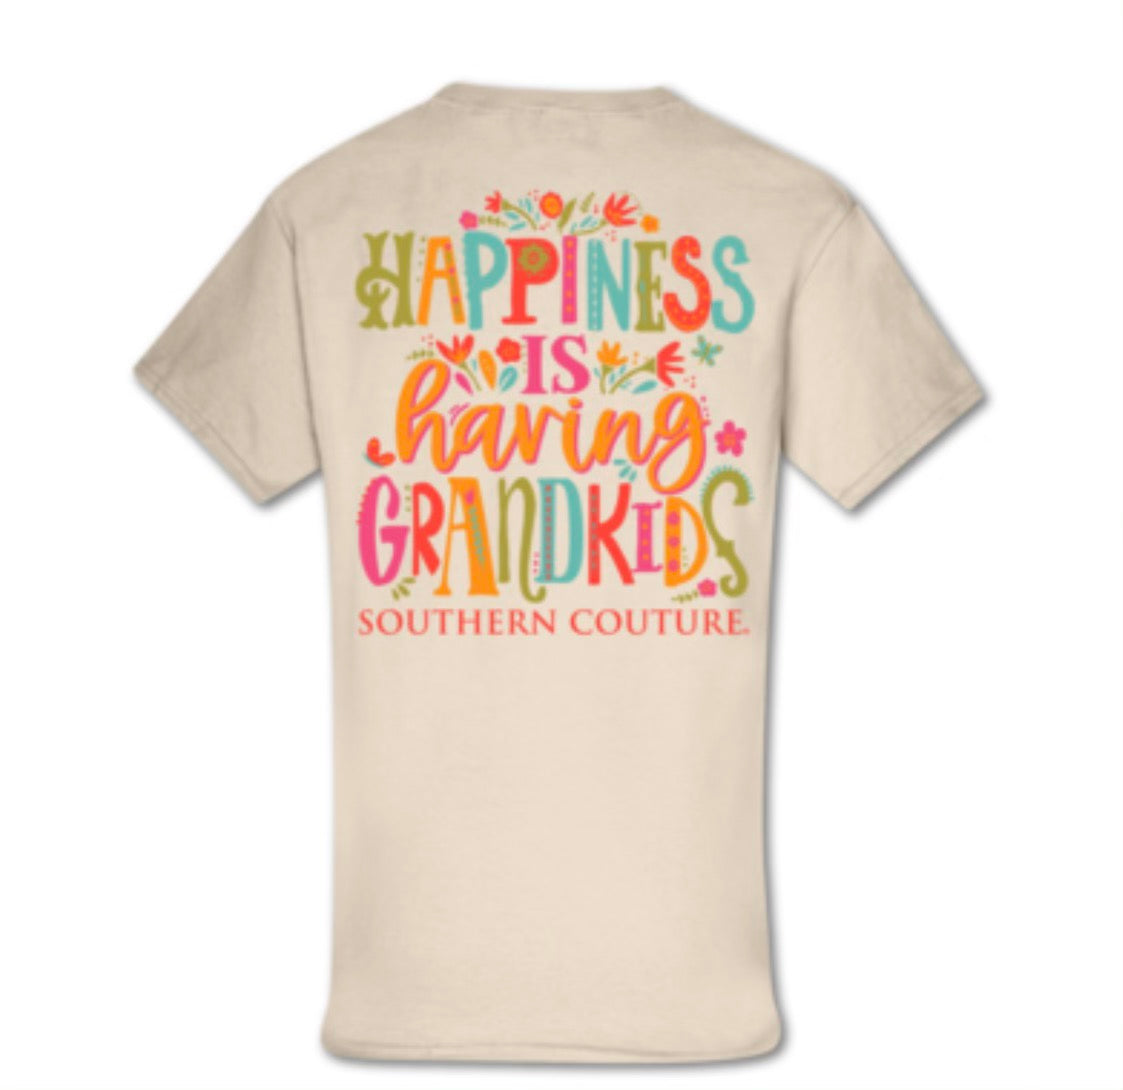 HAPPINESS IS HAVING GRANDKIDS